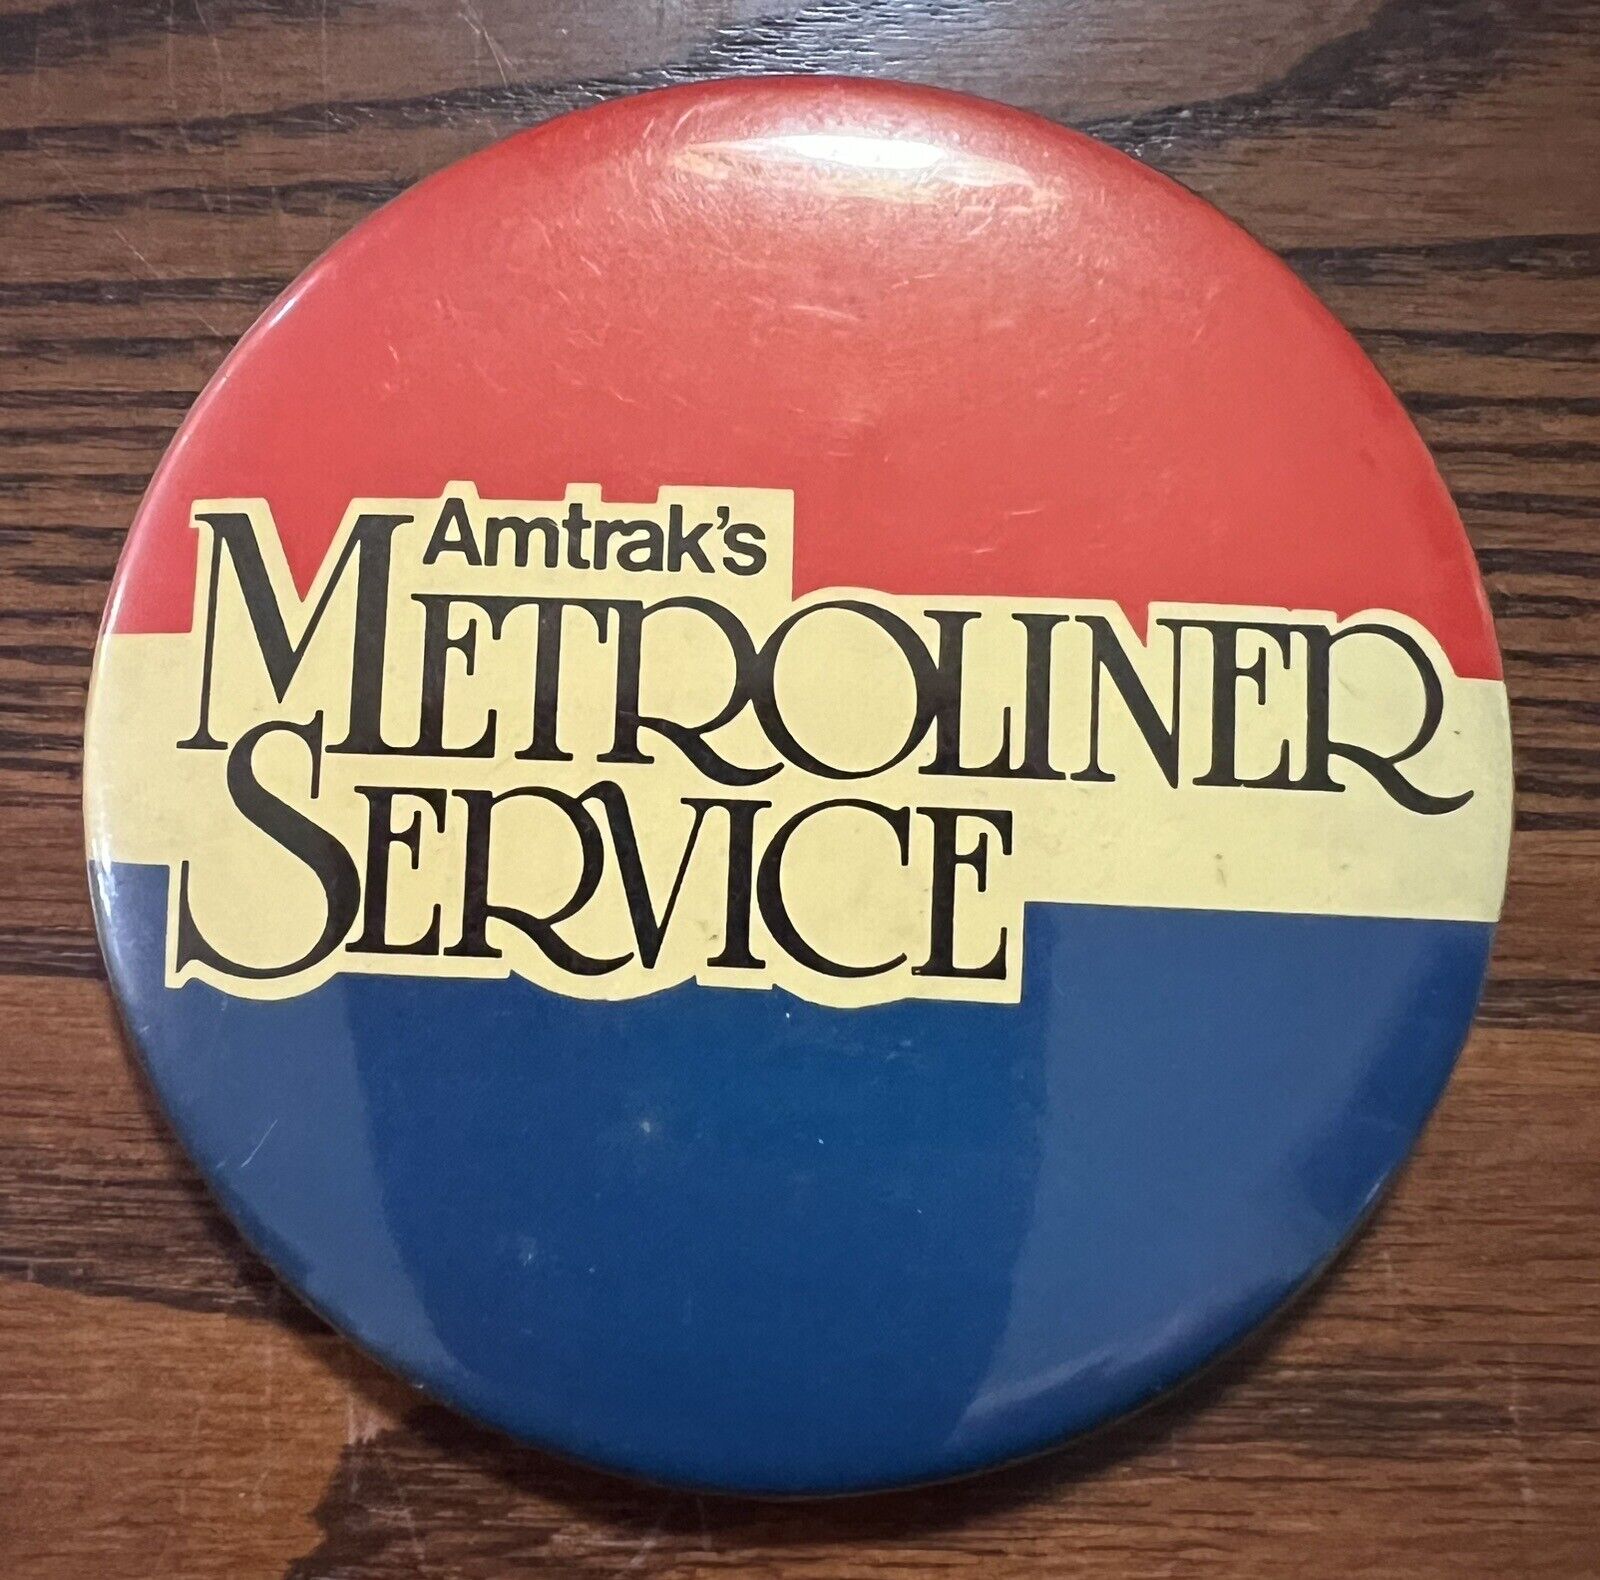 AMTRAK’S METROLINER SERVICE PROMOTIONAL BUTTON